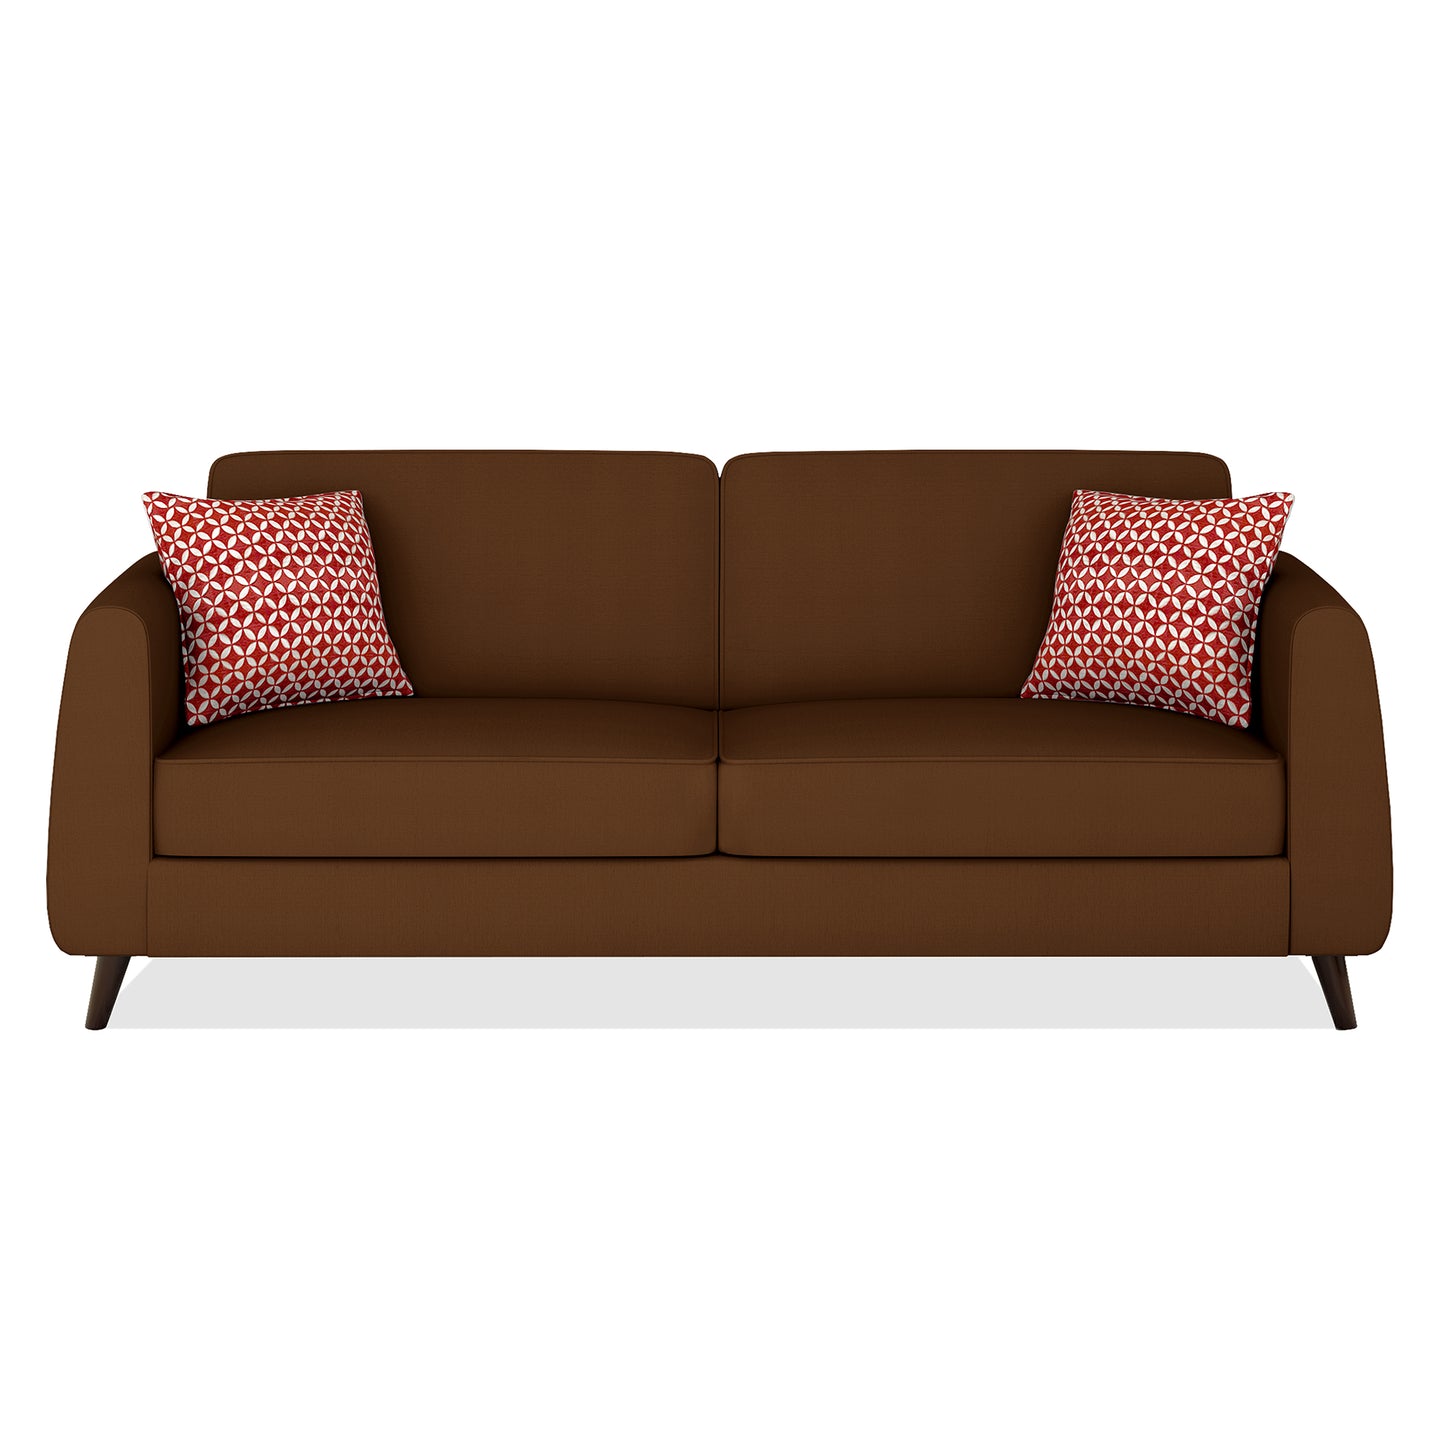 Adorn India Harlem 3 Seater Fabric Sofa (Brown)